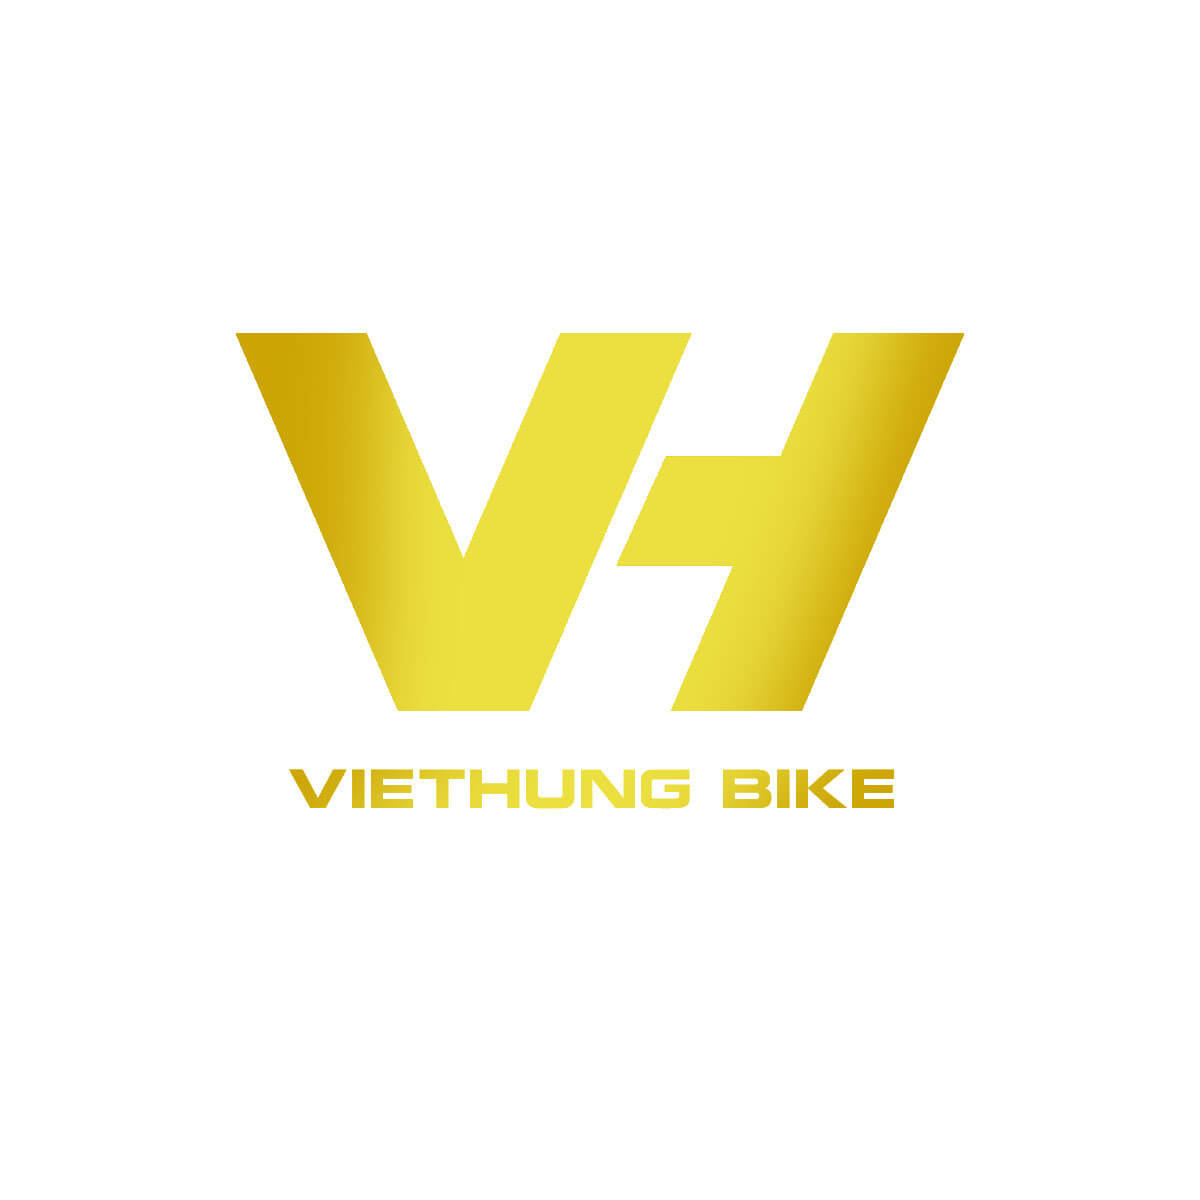 Viet Hung bike logo